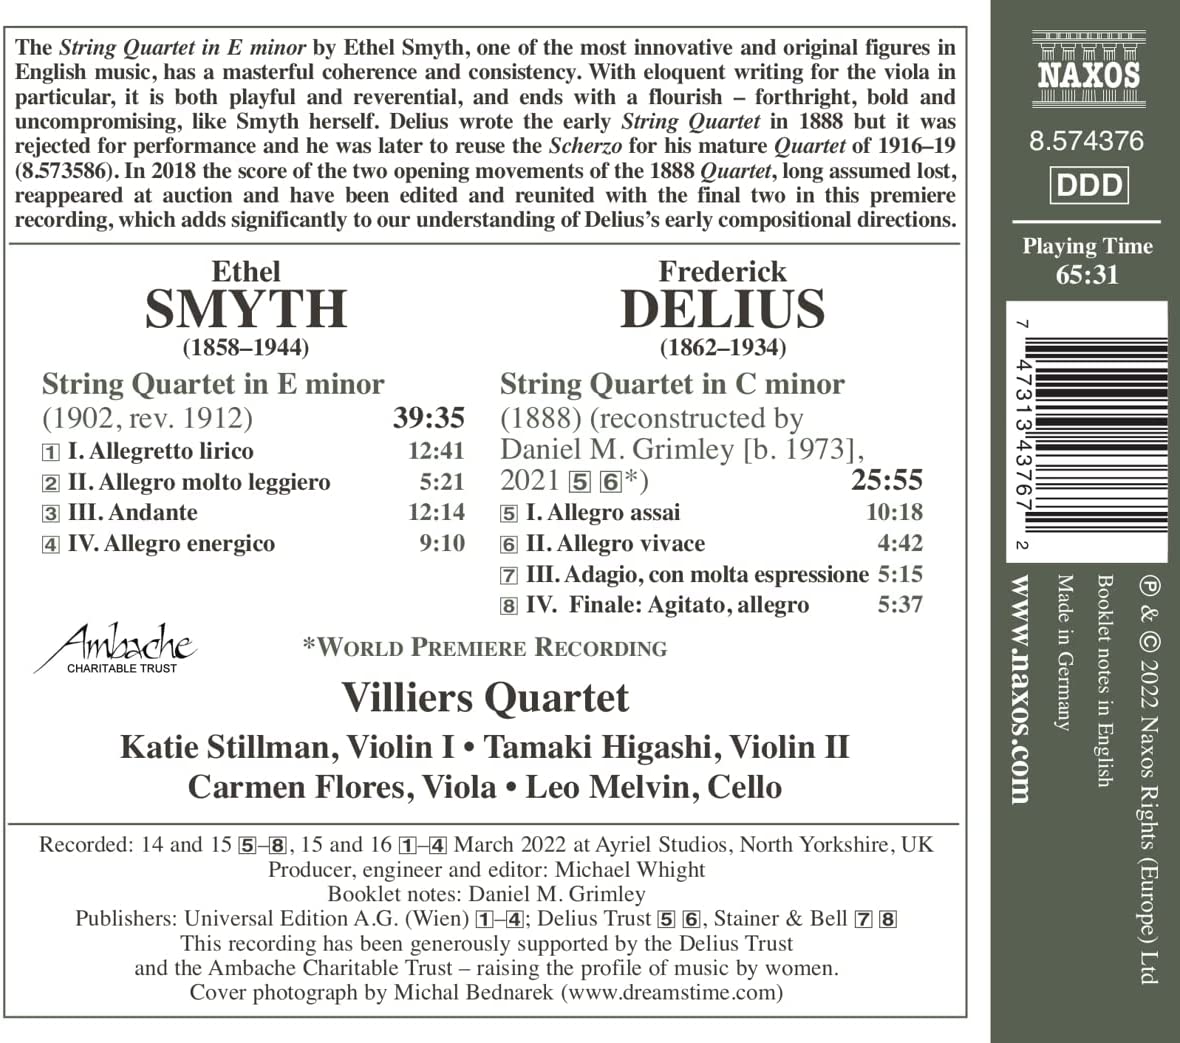 Villiers Quartet 딜리어스 / 에델 스미스: 현악사중주 (Delius / Smyth: String Quartets)